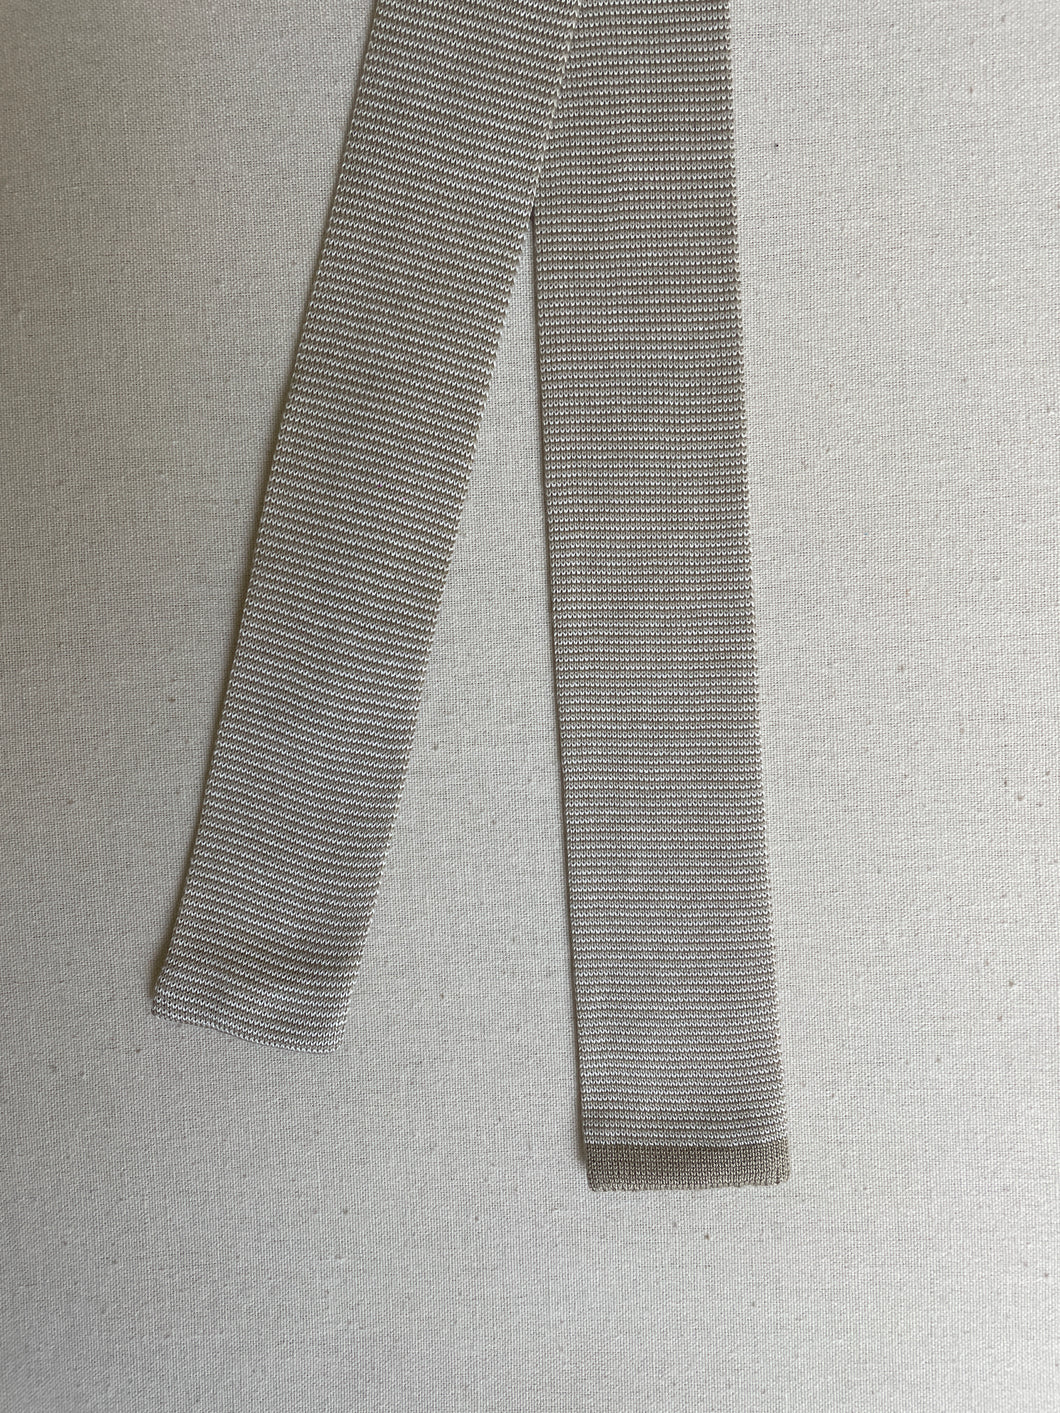 Corneliani cravate beige à bout carré 100% coton Made in Italy